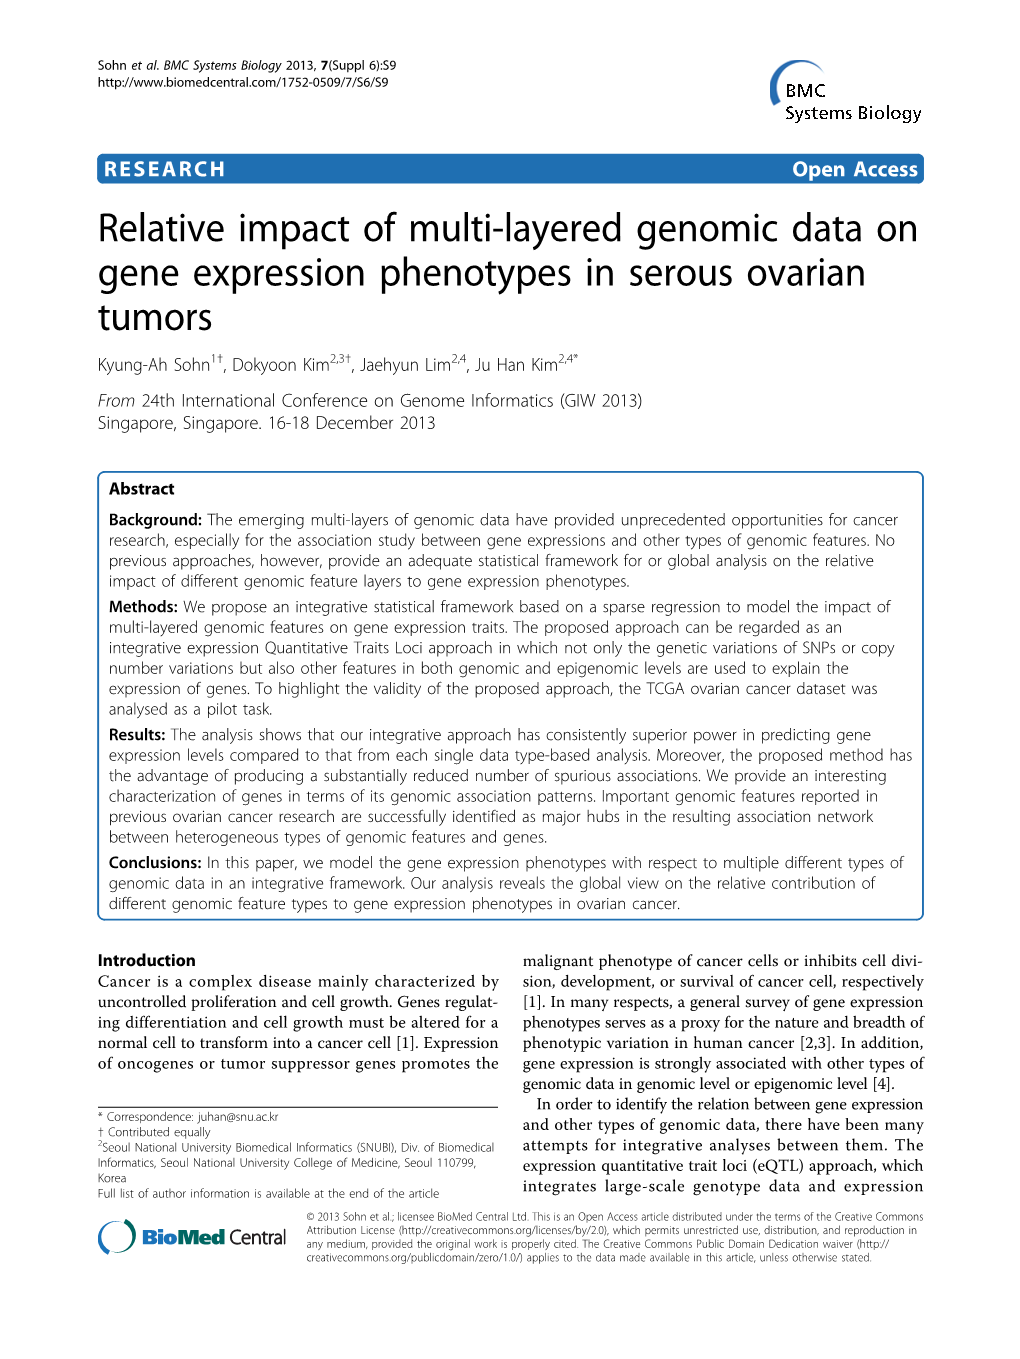 Relative Impact of Multi-Layered Genomic Data on Gene Expression